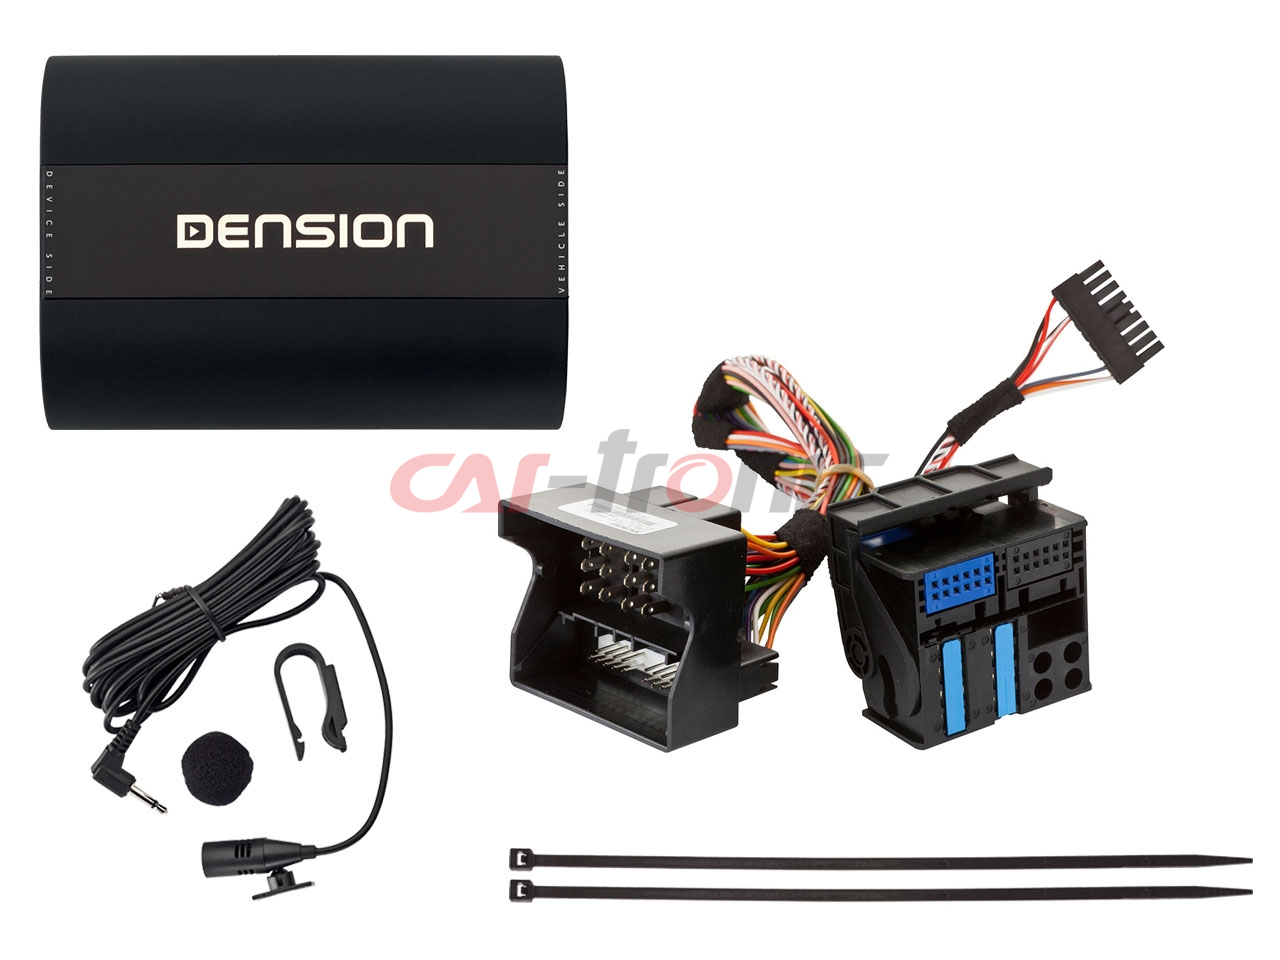 Dension Pro BT,AUX,USB,iPhone,ID3,DAB+ - VW RCD300/500